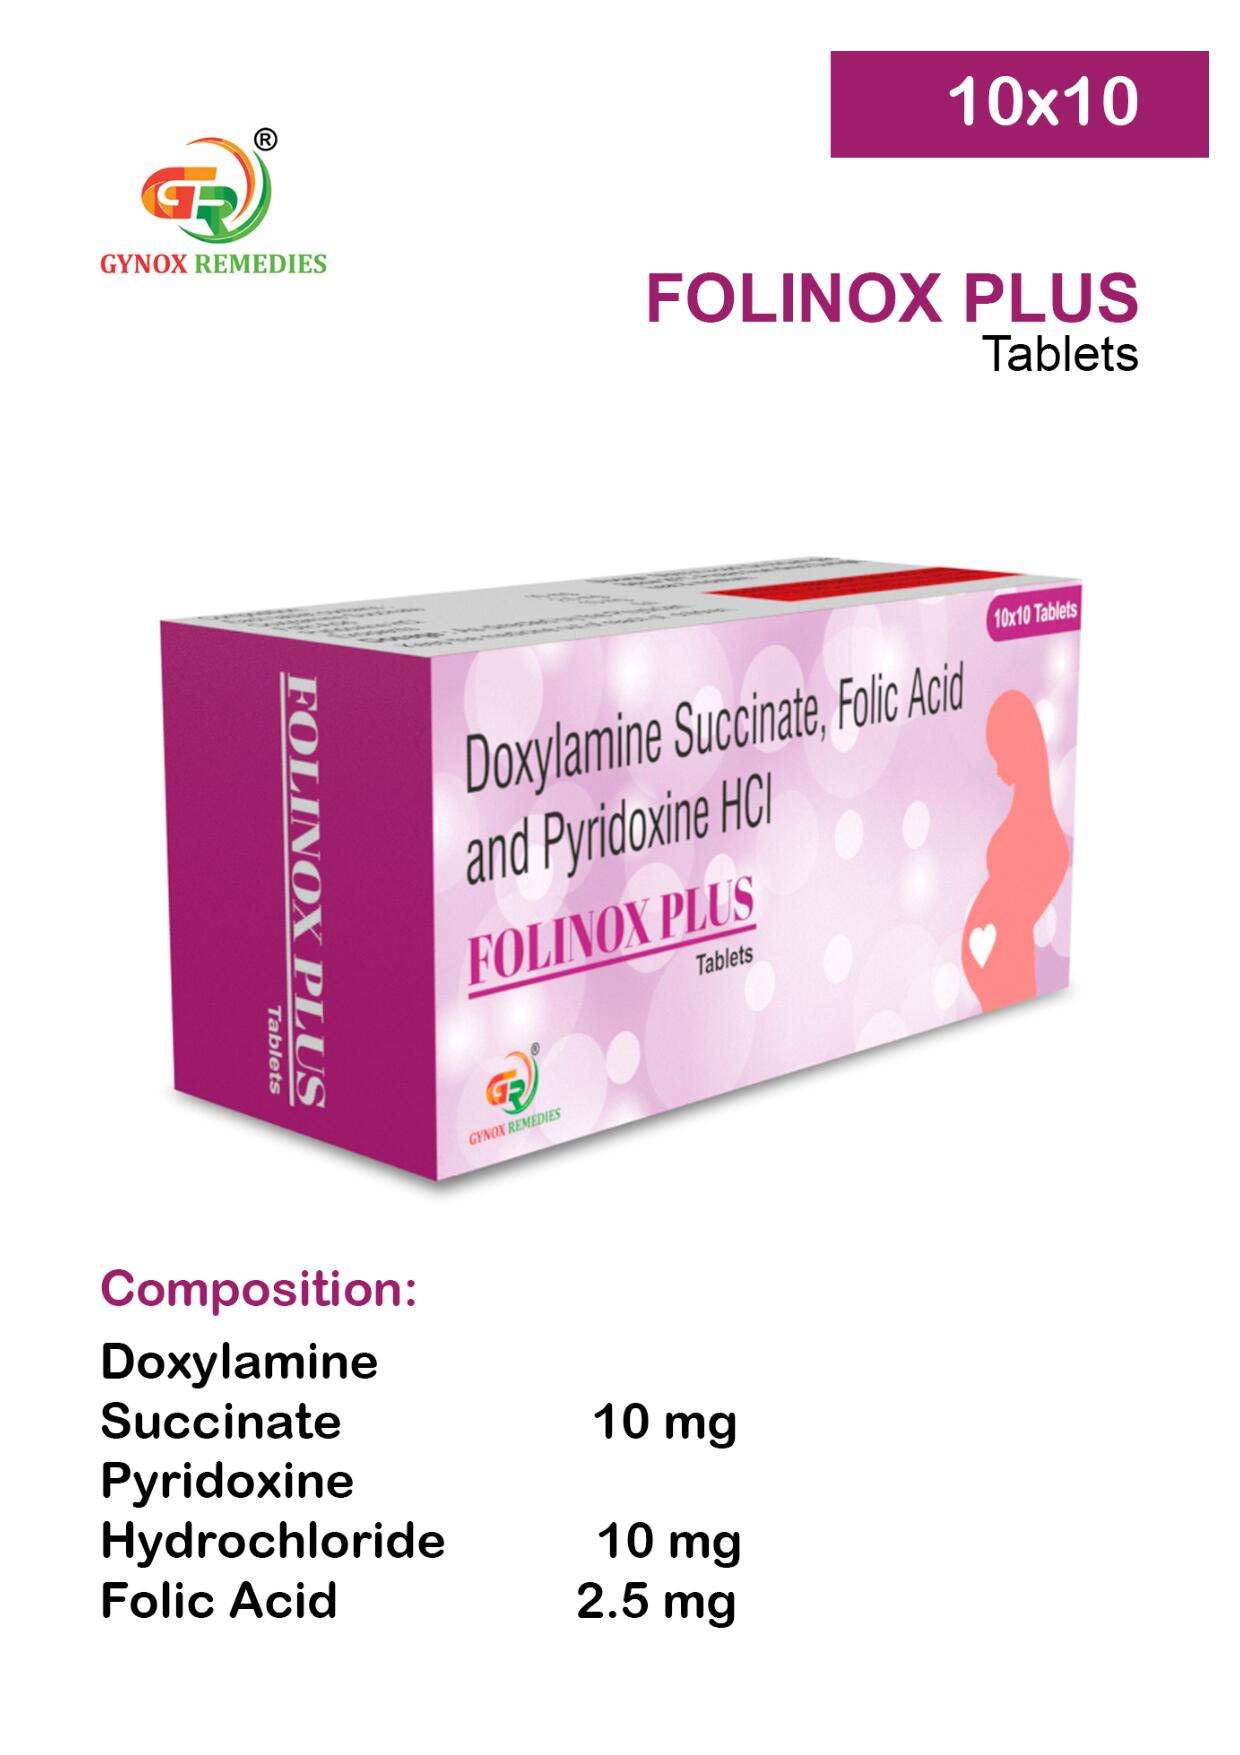 doxylamine succinate 10mg+pyridoxine hydrochloride 10mg+folic acid2.5mg